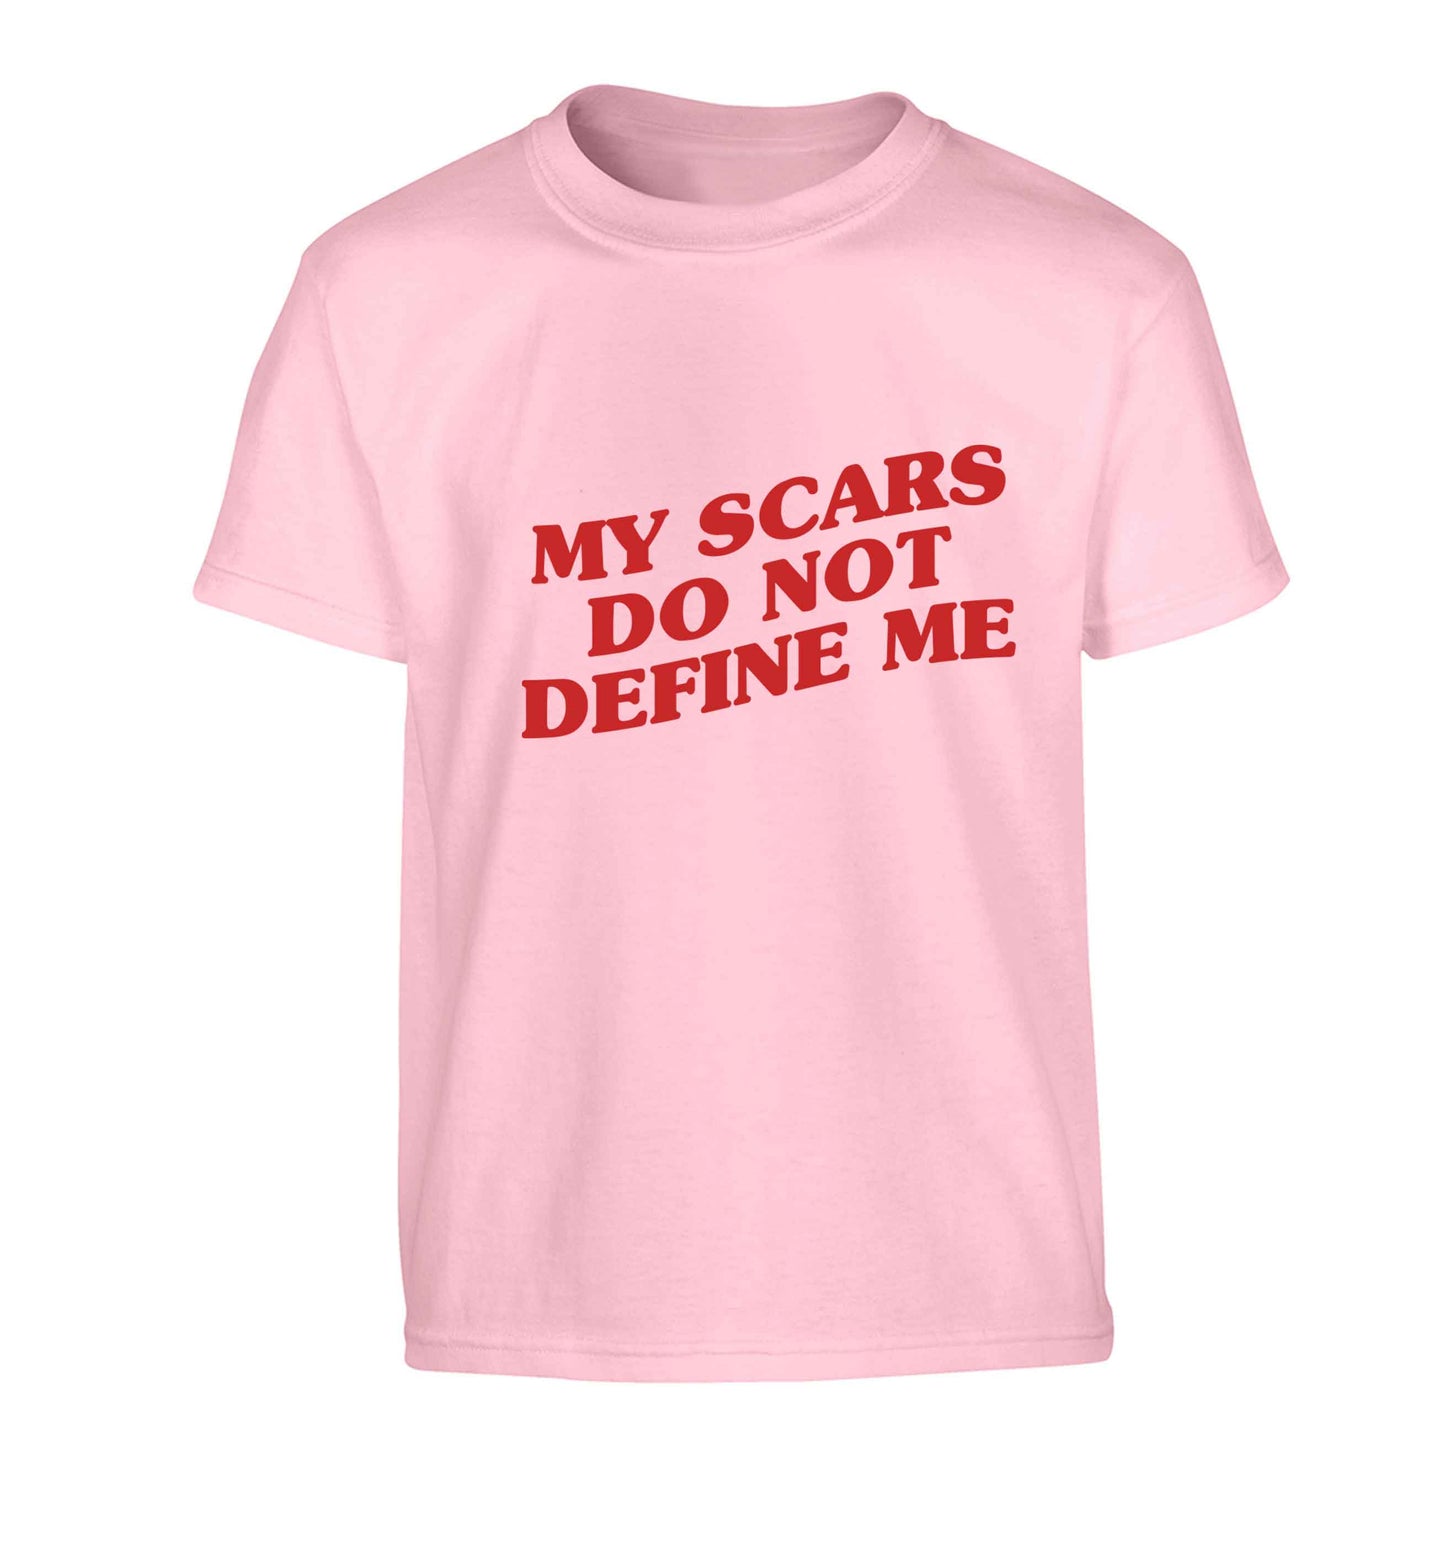 My scars do not define me Children's light pink Tshirt 12-13 Years